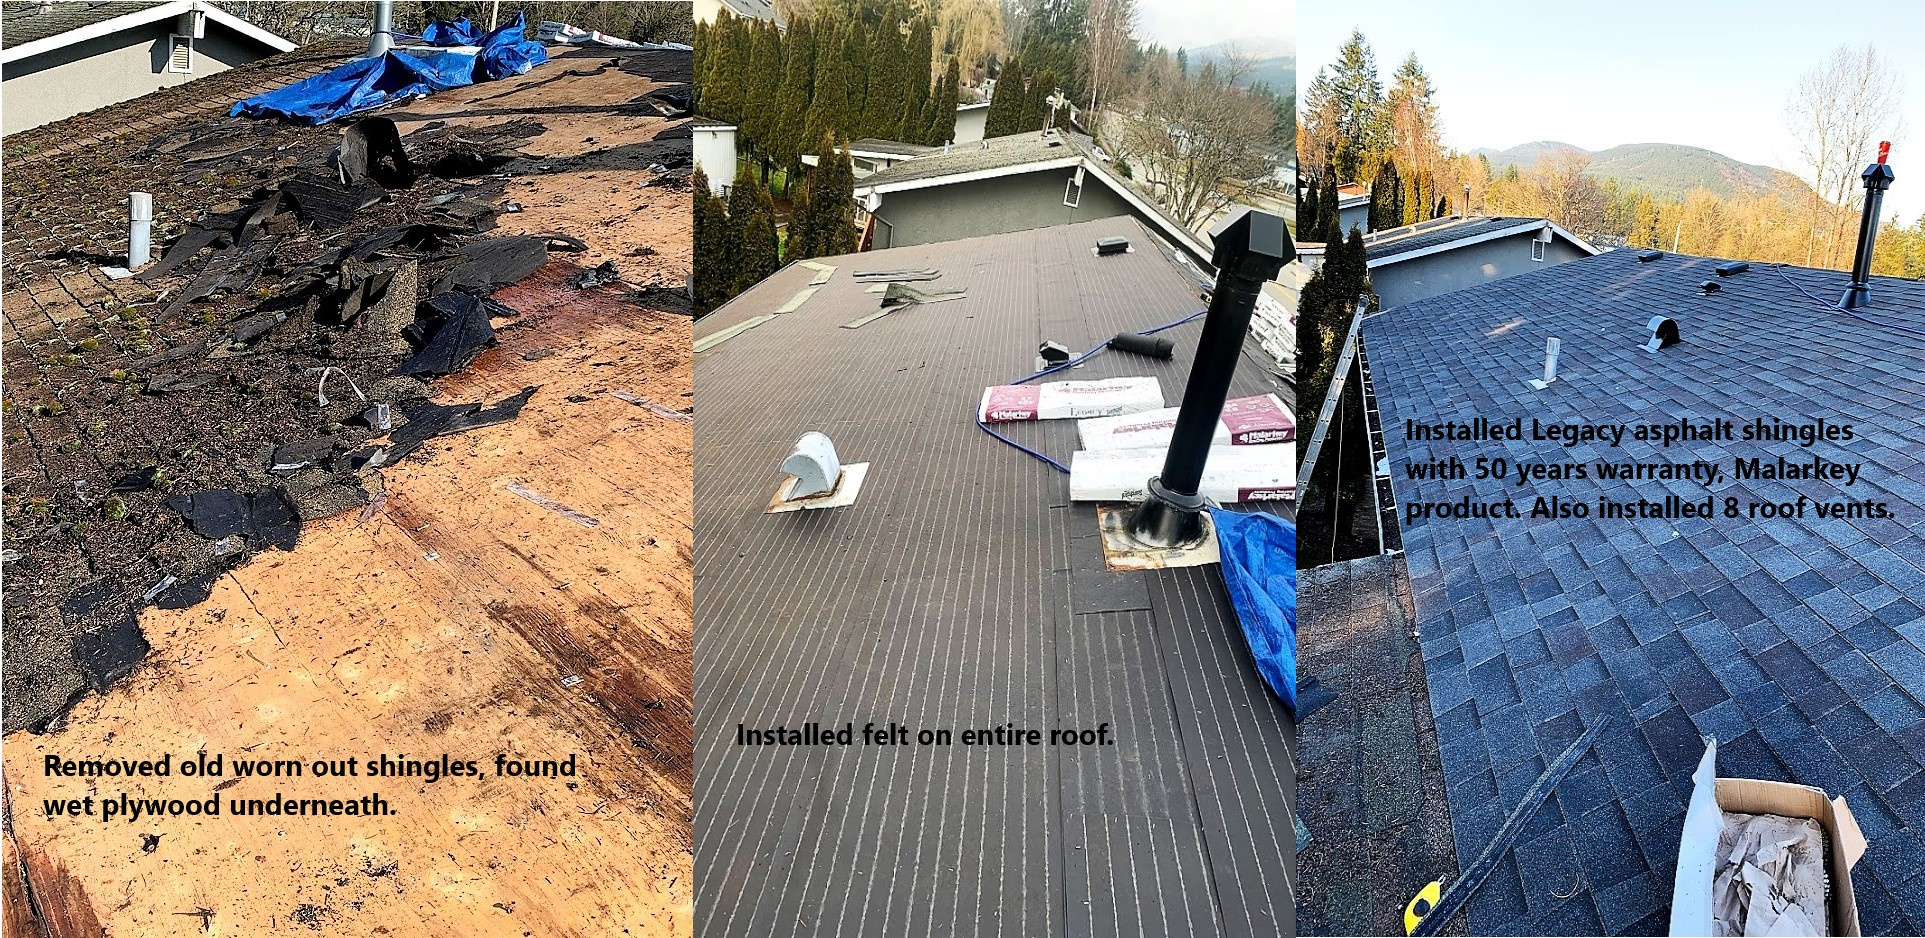 Installed new asphalt roof shingles using Malarkey roof product 50 years warranty